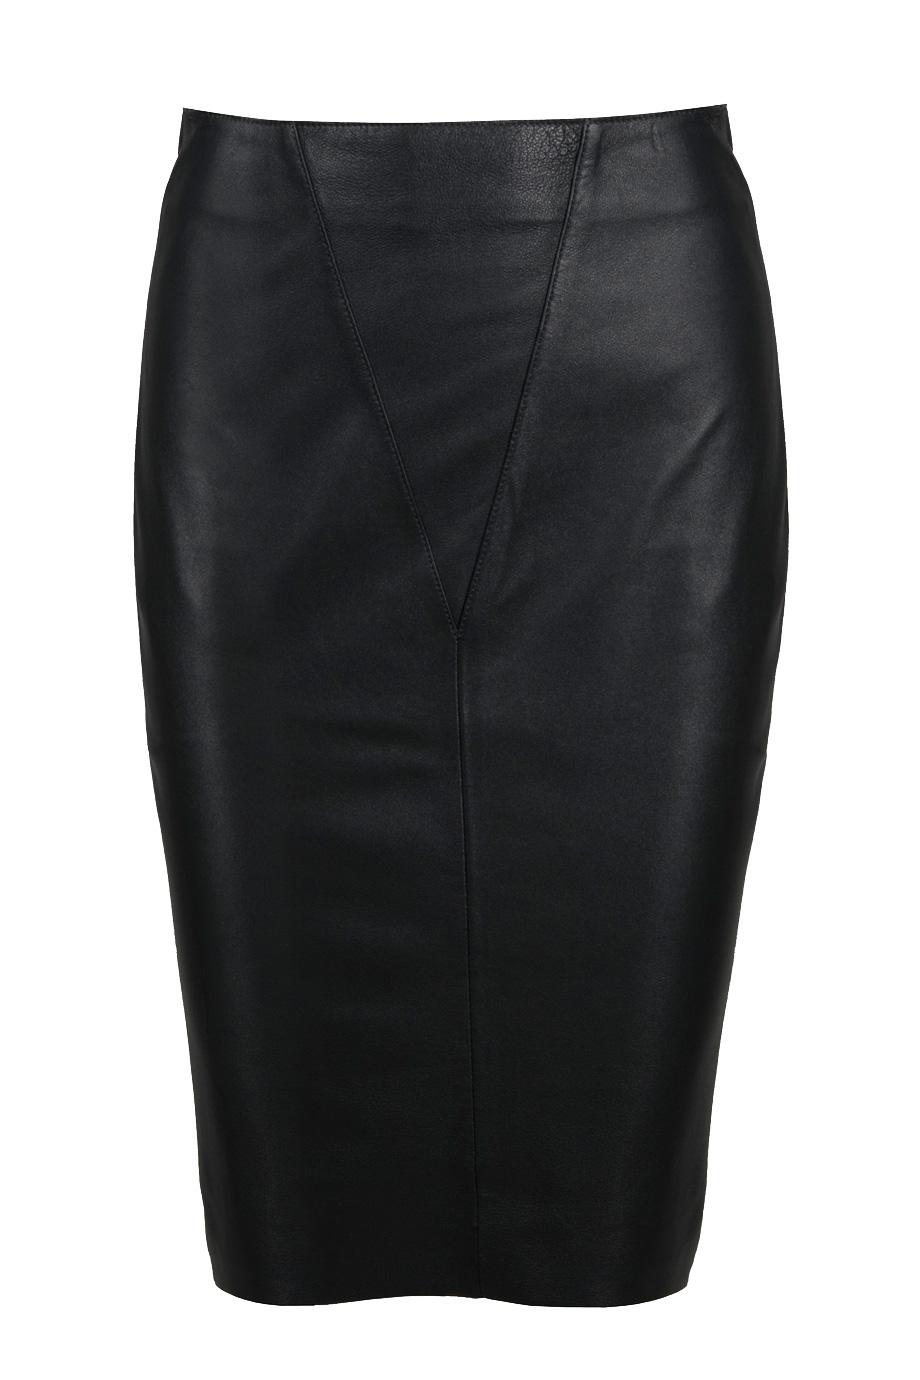 Jasmine di milo Winter Leather Pencil Skirt in Black | Lyst